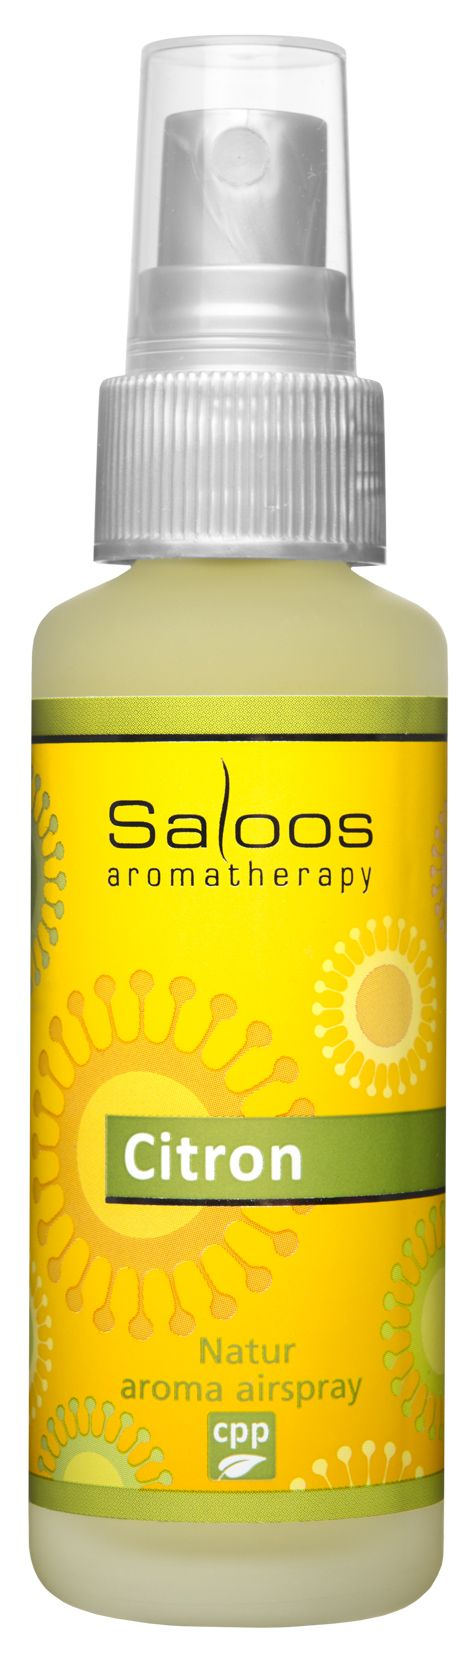 Saloos Natur aroma airspray Citron 50 ml Saloos